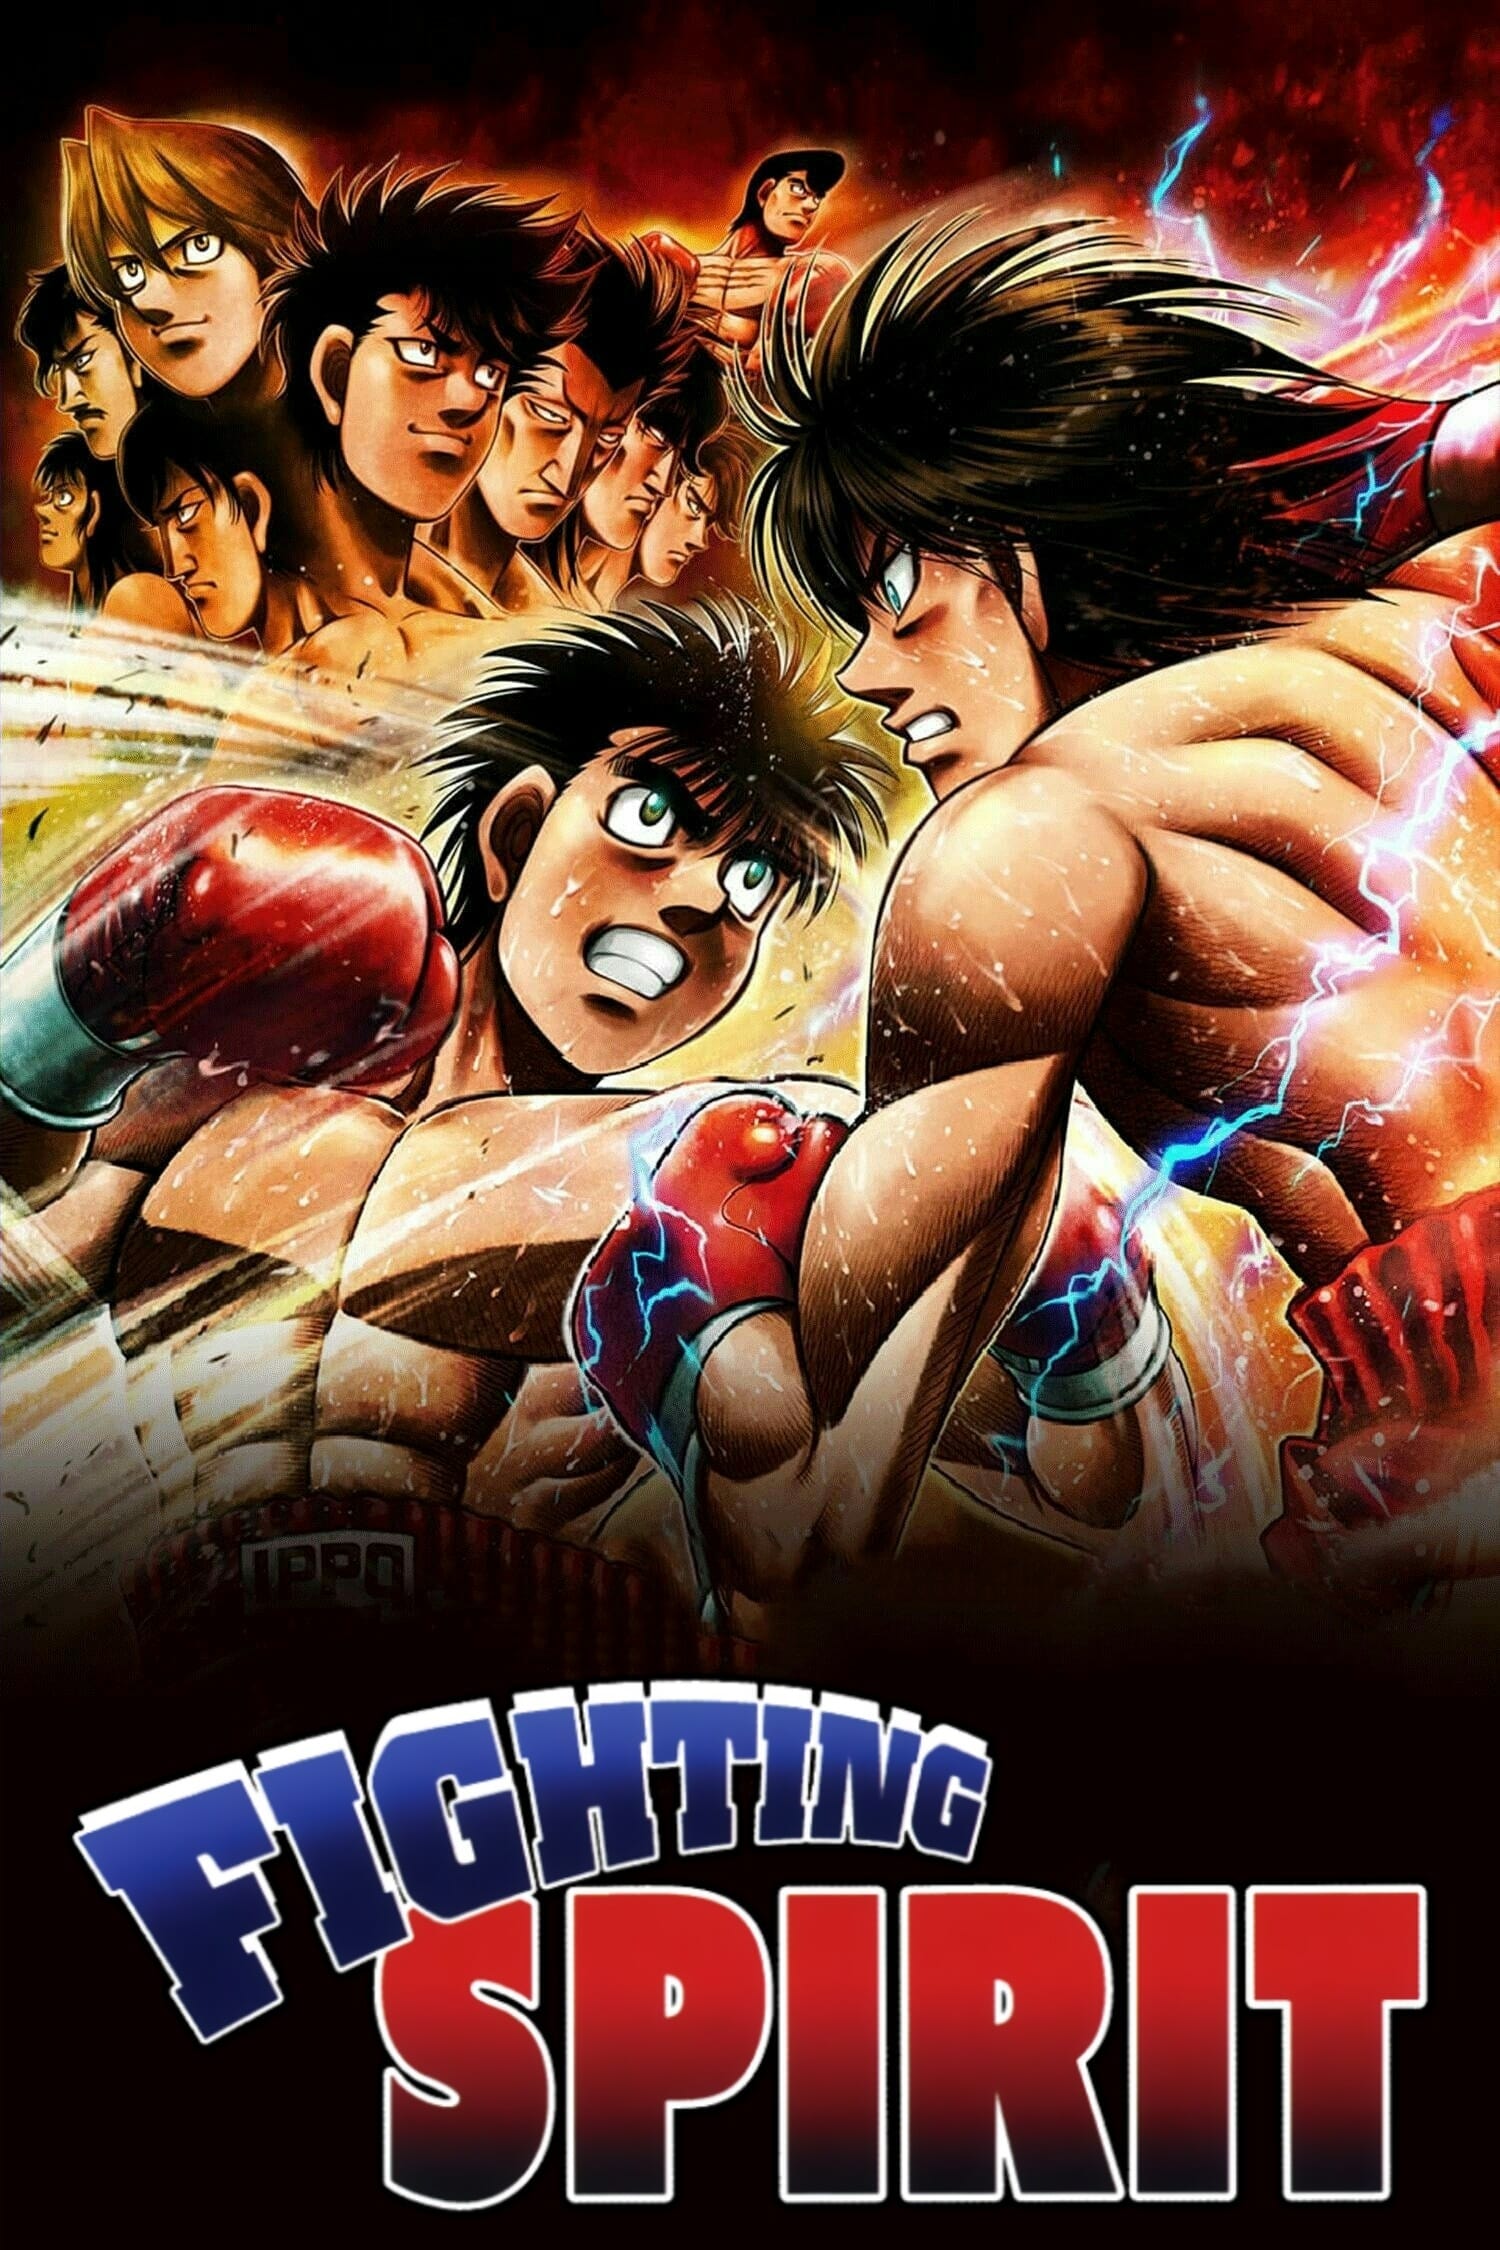 The Fighting: Hajime no Ippo